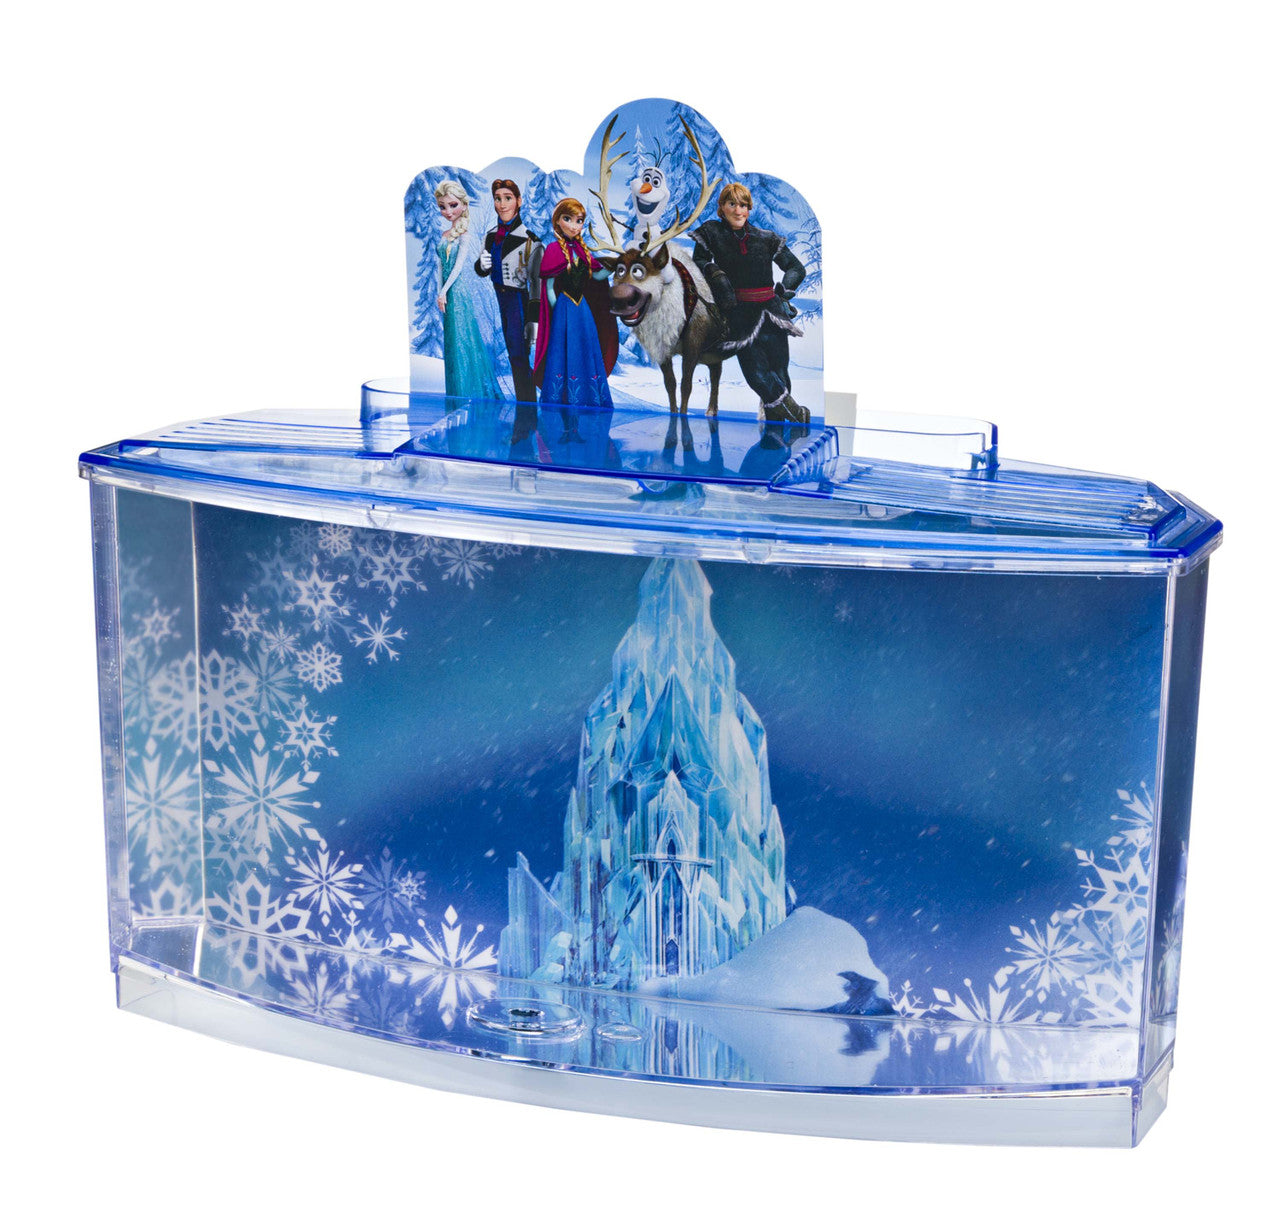 Disney Frozen Themed Betta Fish Tank Multi-Color 0.7 gal